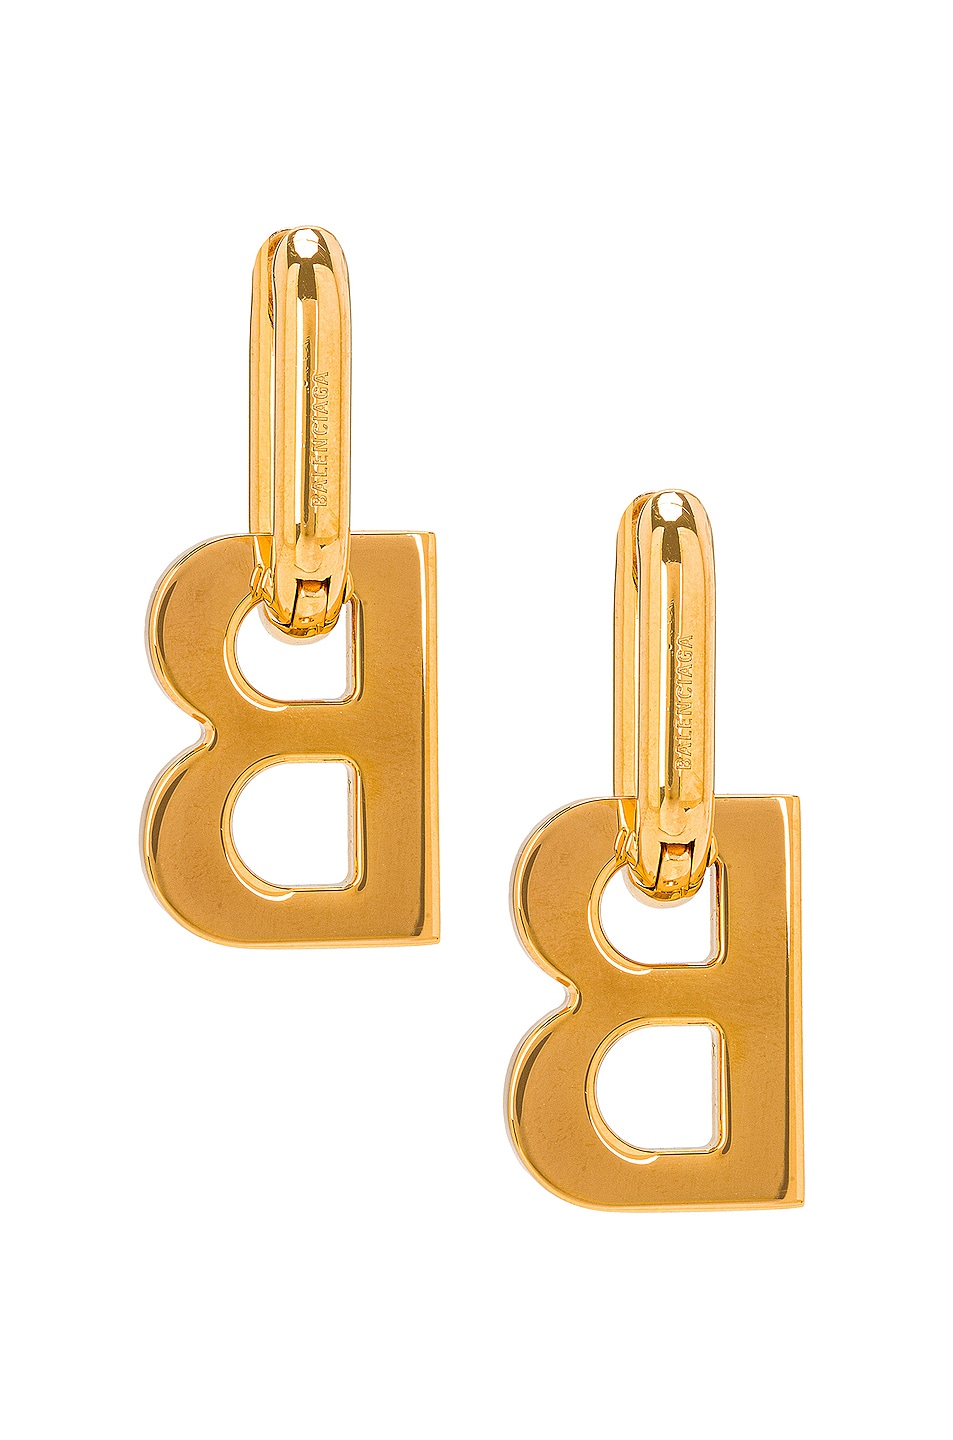 Balenciaga XL B Chain Earrings in Shiny Gold | FWRD